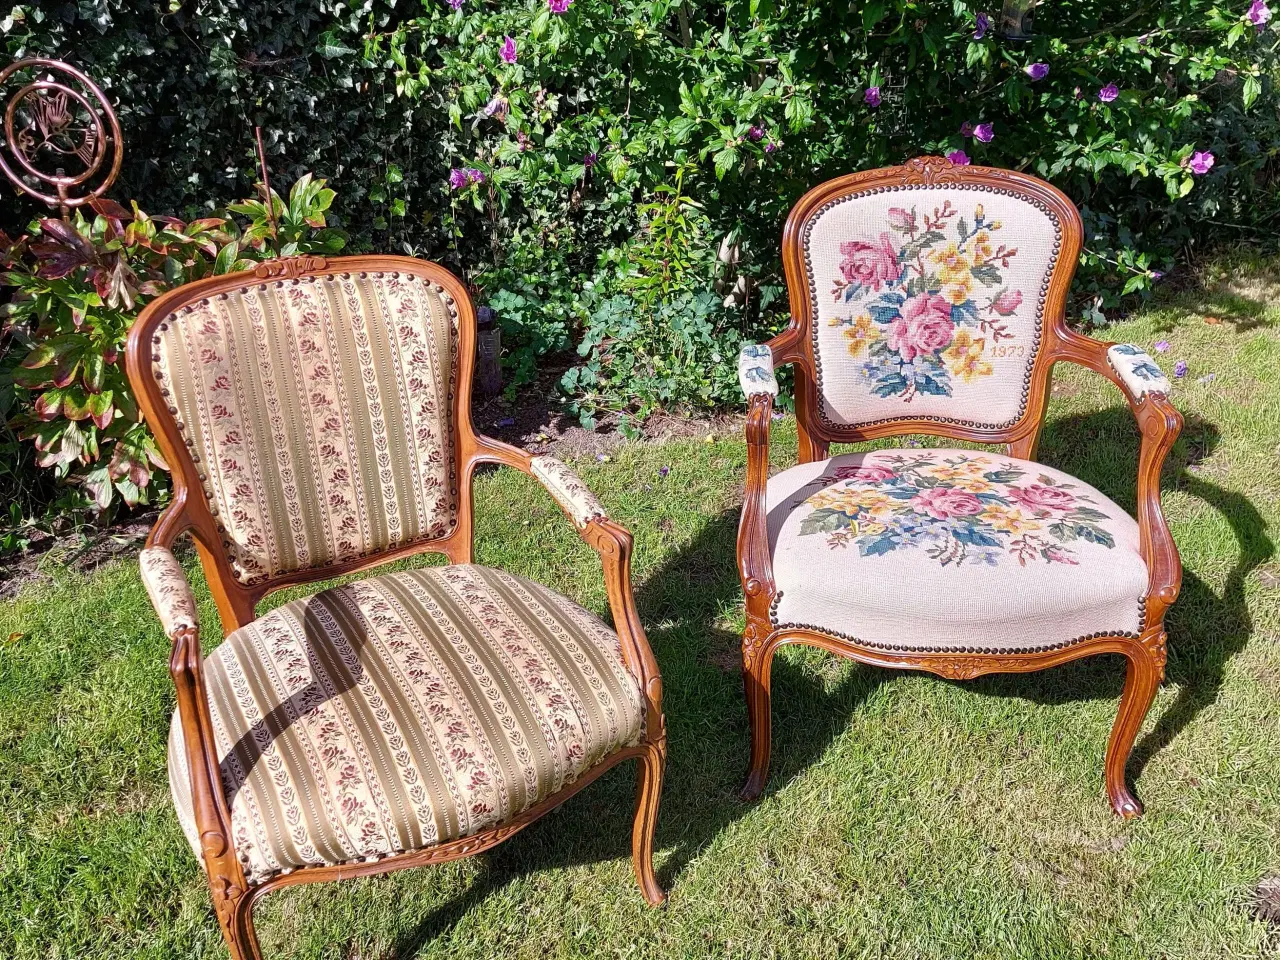 Billede 1 - to gamle stole